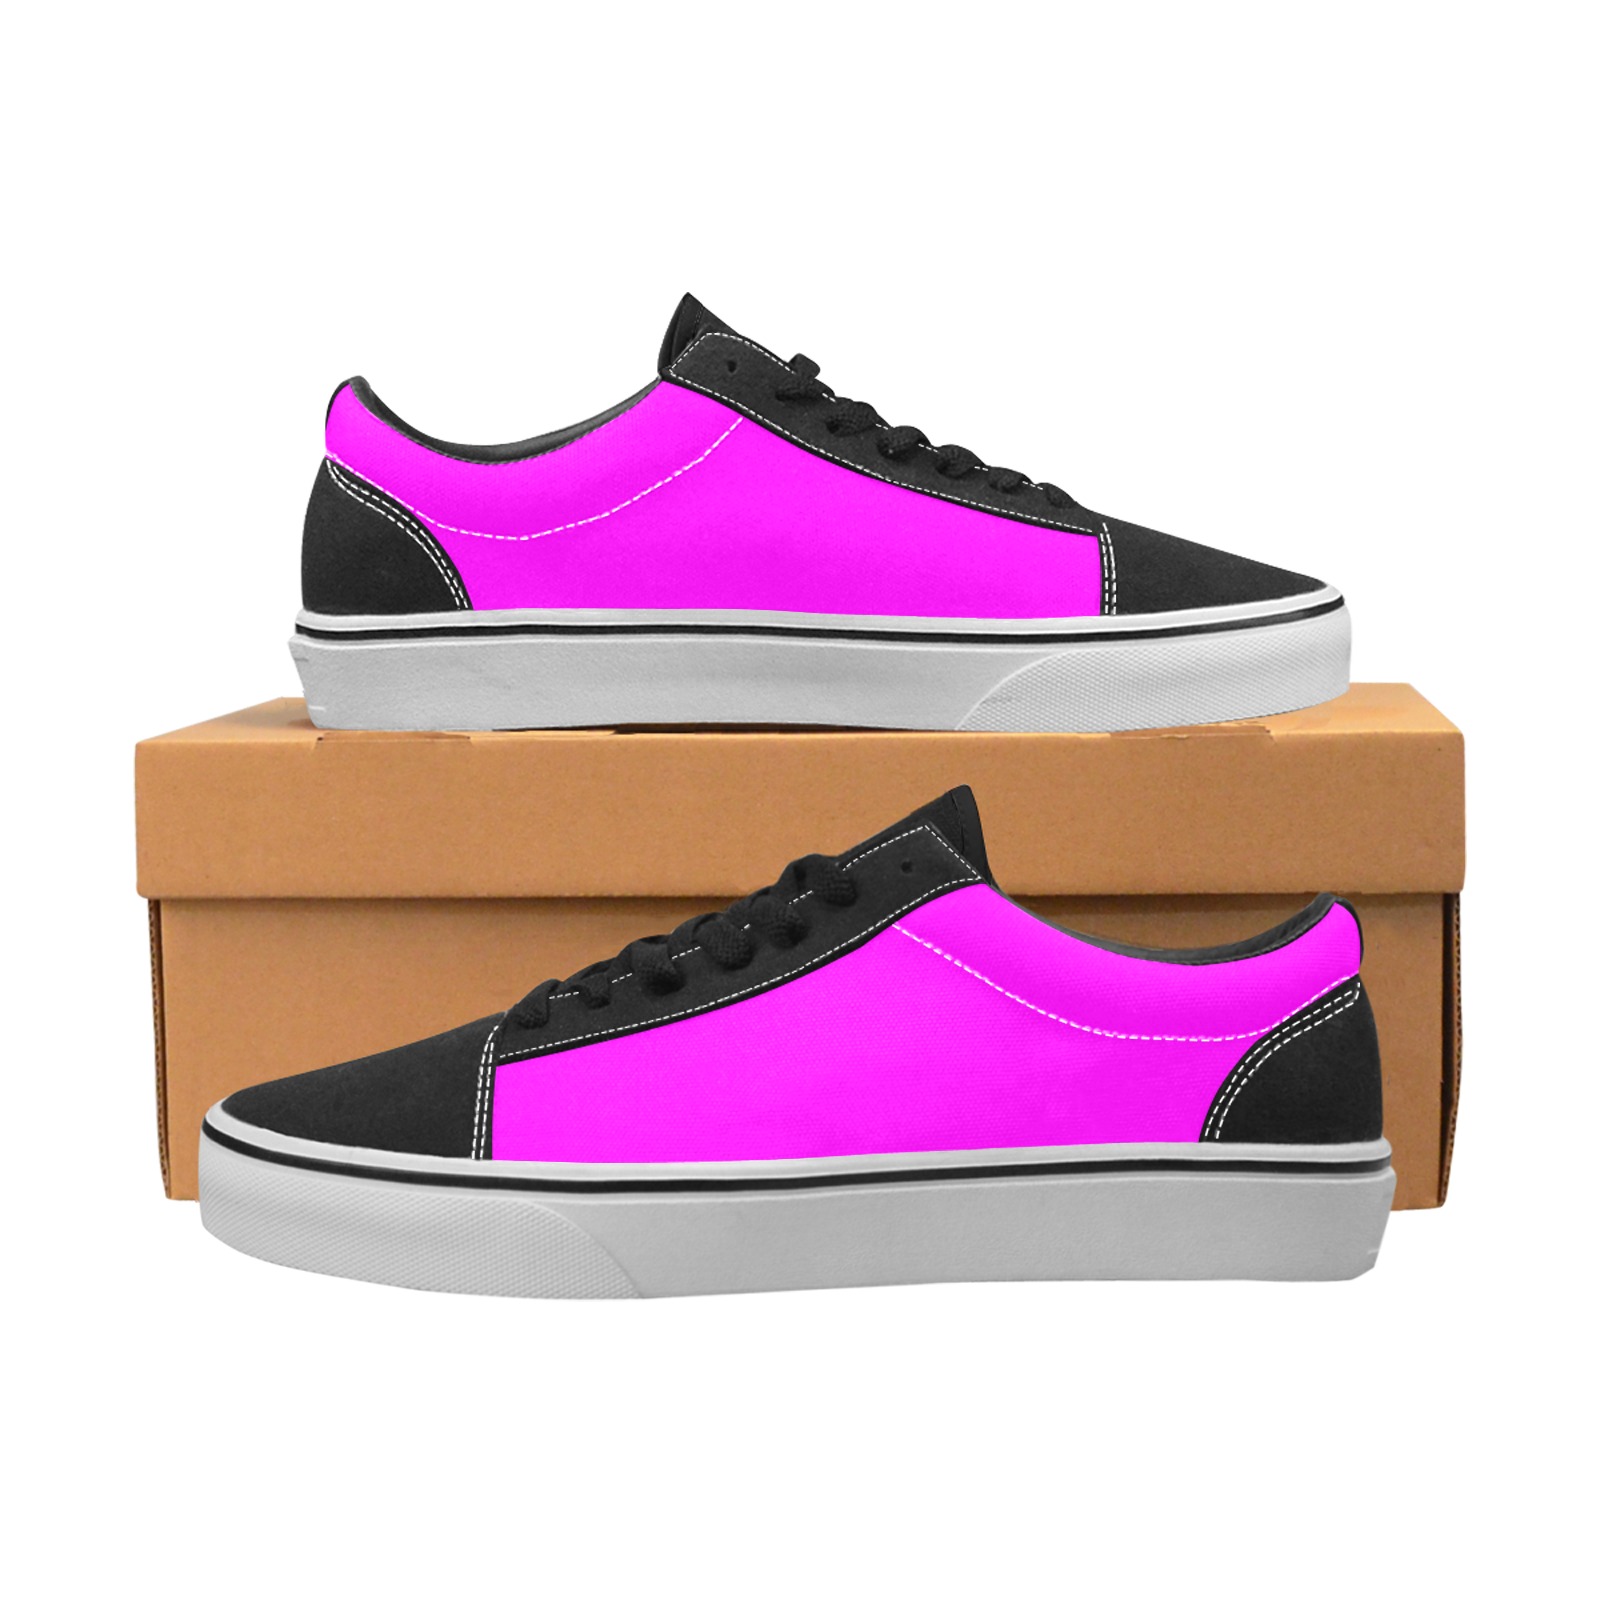 color fuchsia / magenta Women's Low Top Skateboarding Shoes (Model E001-2)